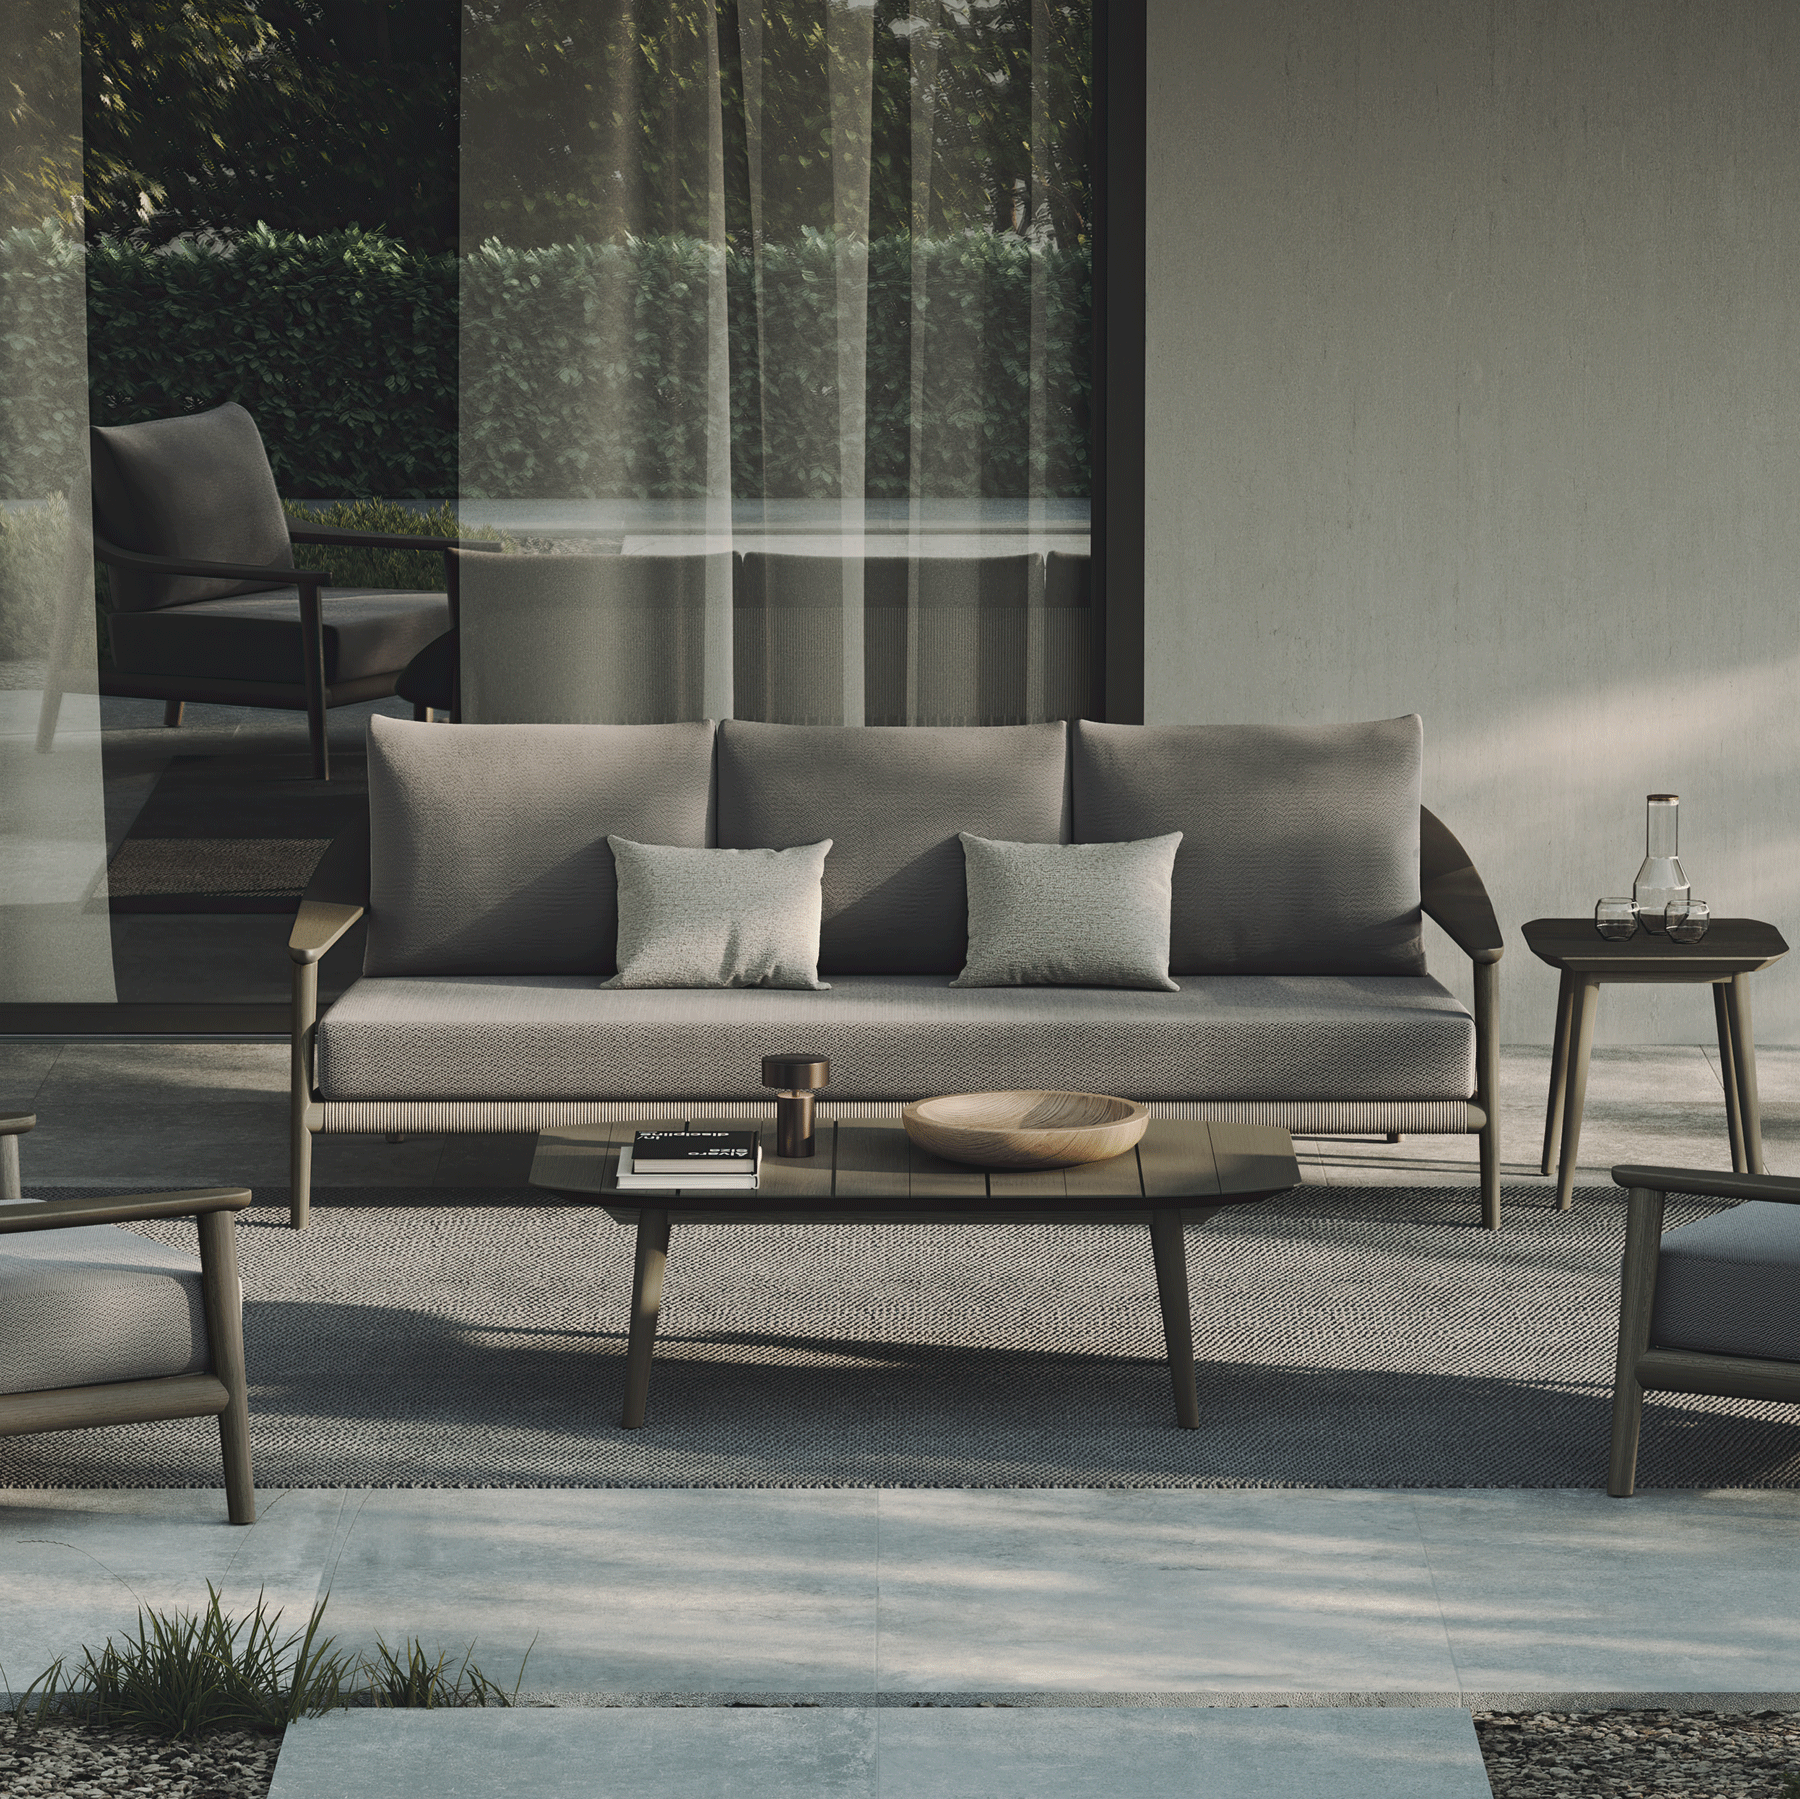 N1 luxury dark teak outdoor furniture with mid century inspired rope detail sofa set